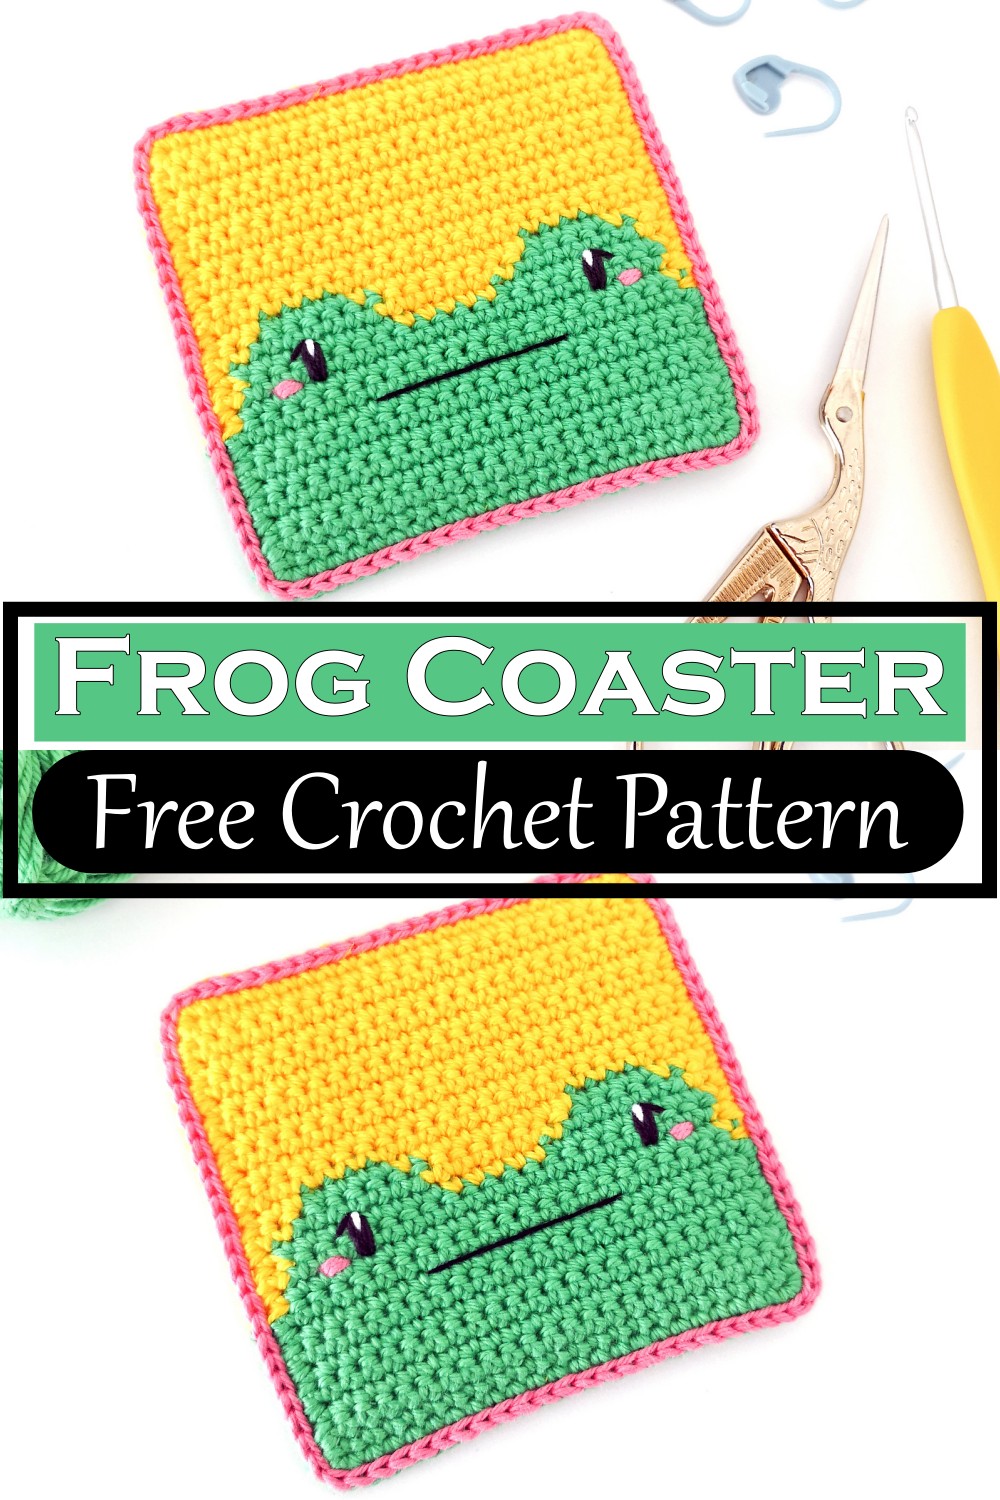 Frog Coaster